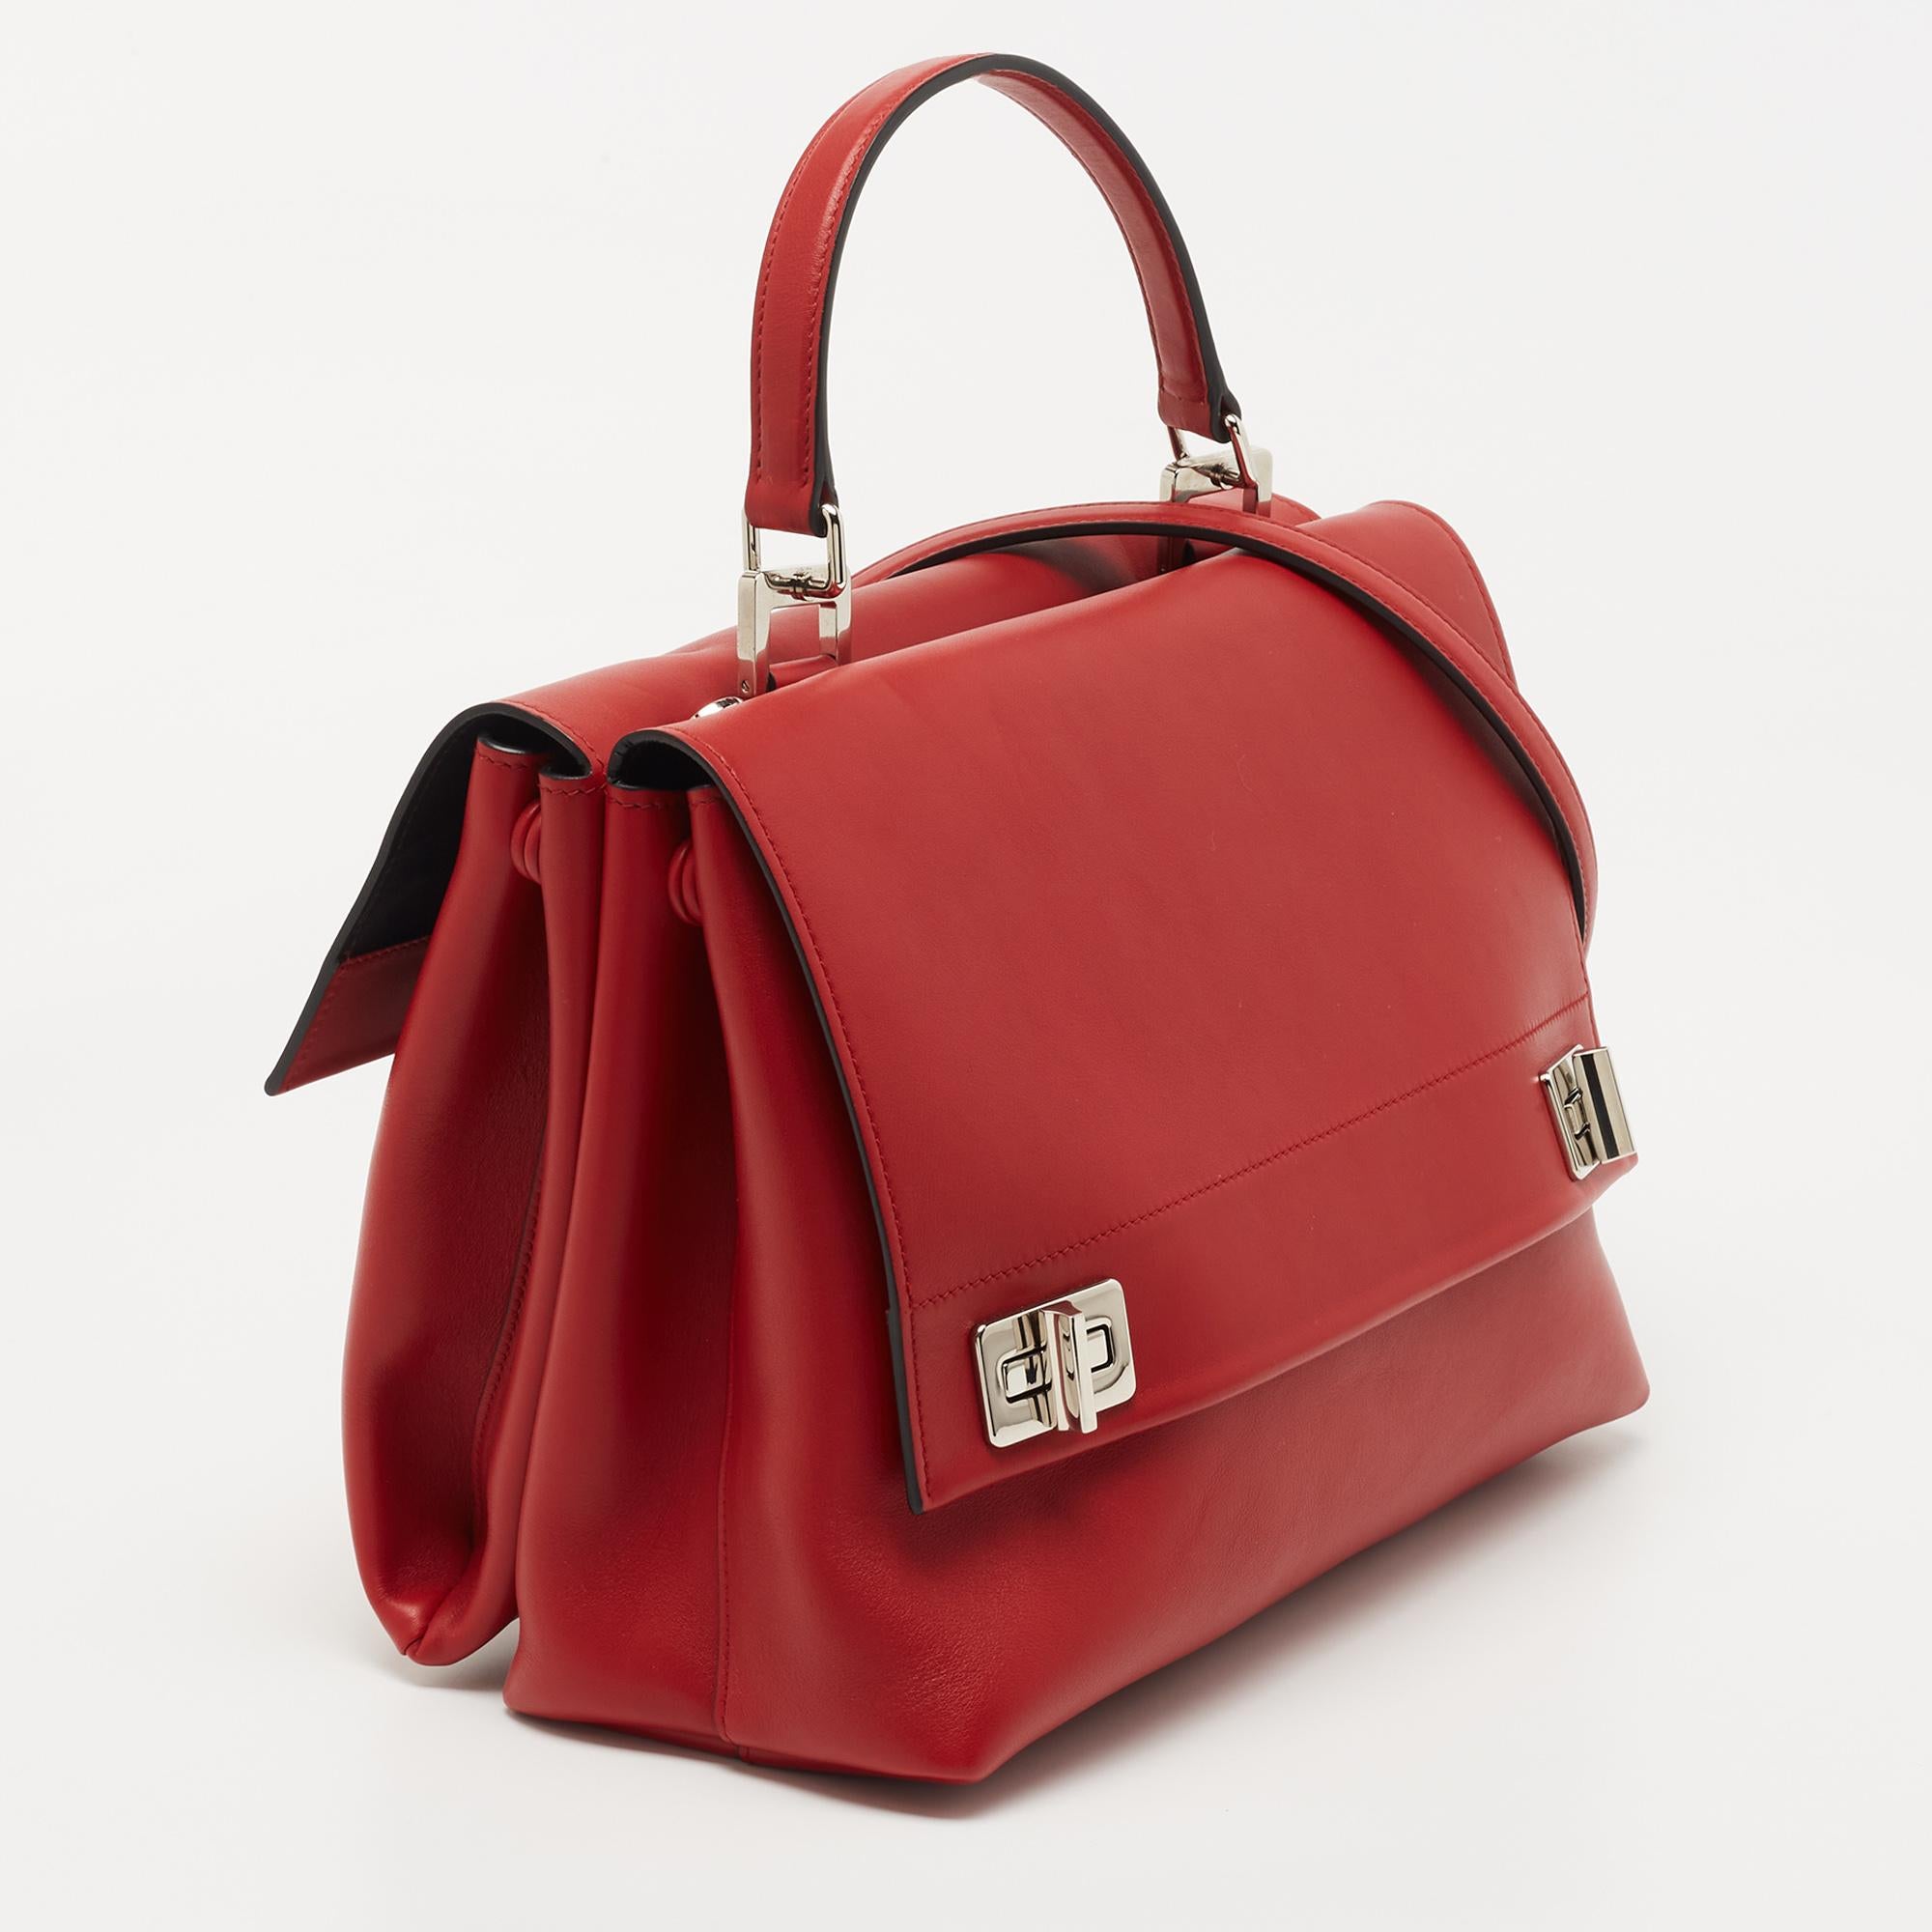 Women's Prada Red Leather Top Handle Bag